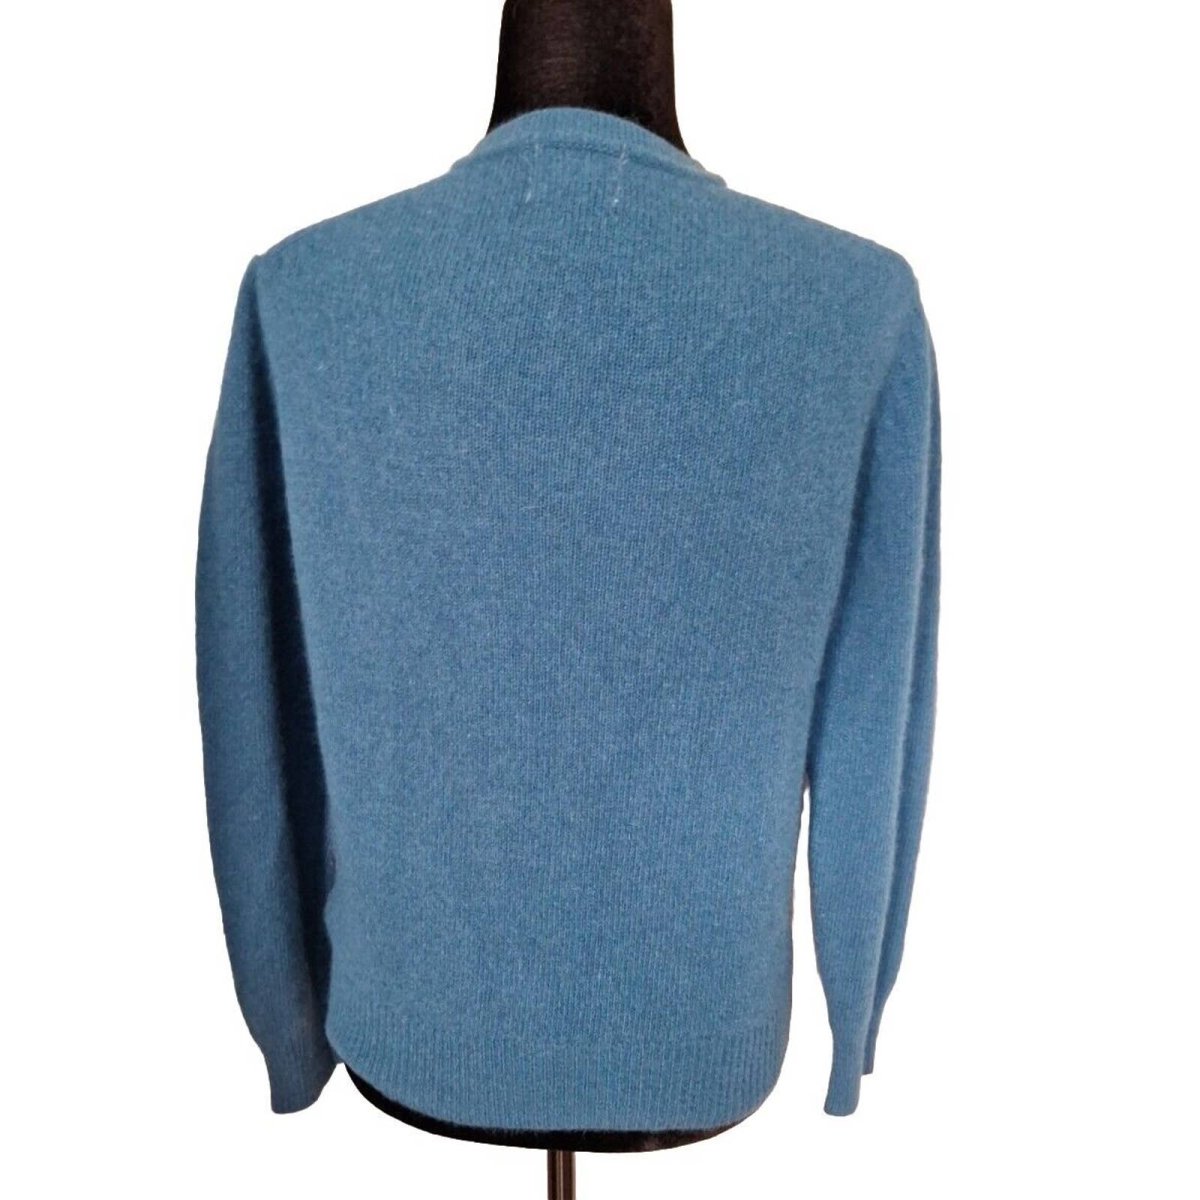 Vintage Argyle Angora Sweater, Size Medium - themallvintage The Mall Vintage